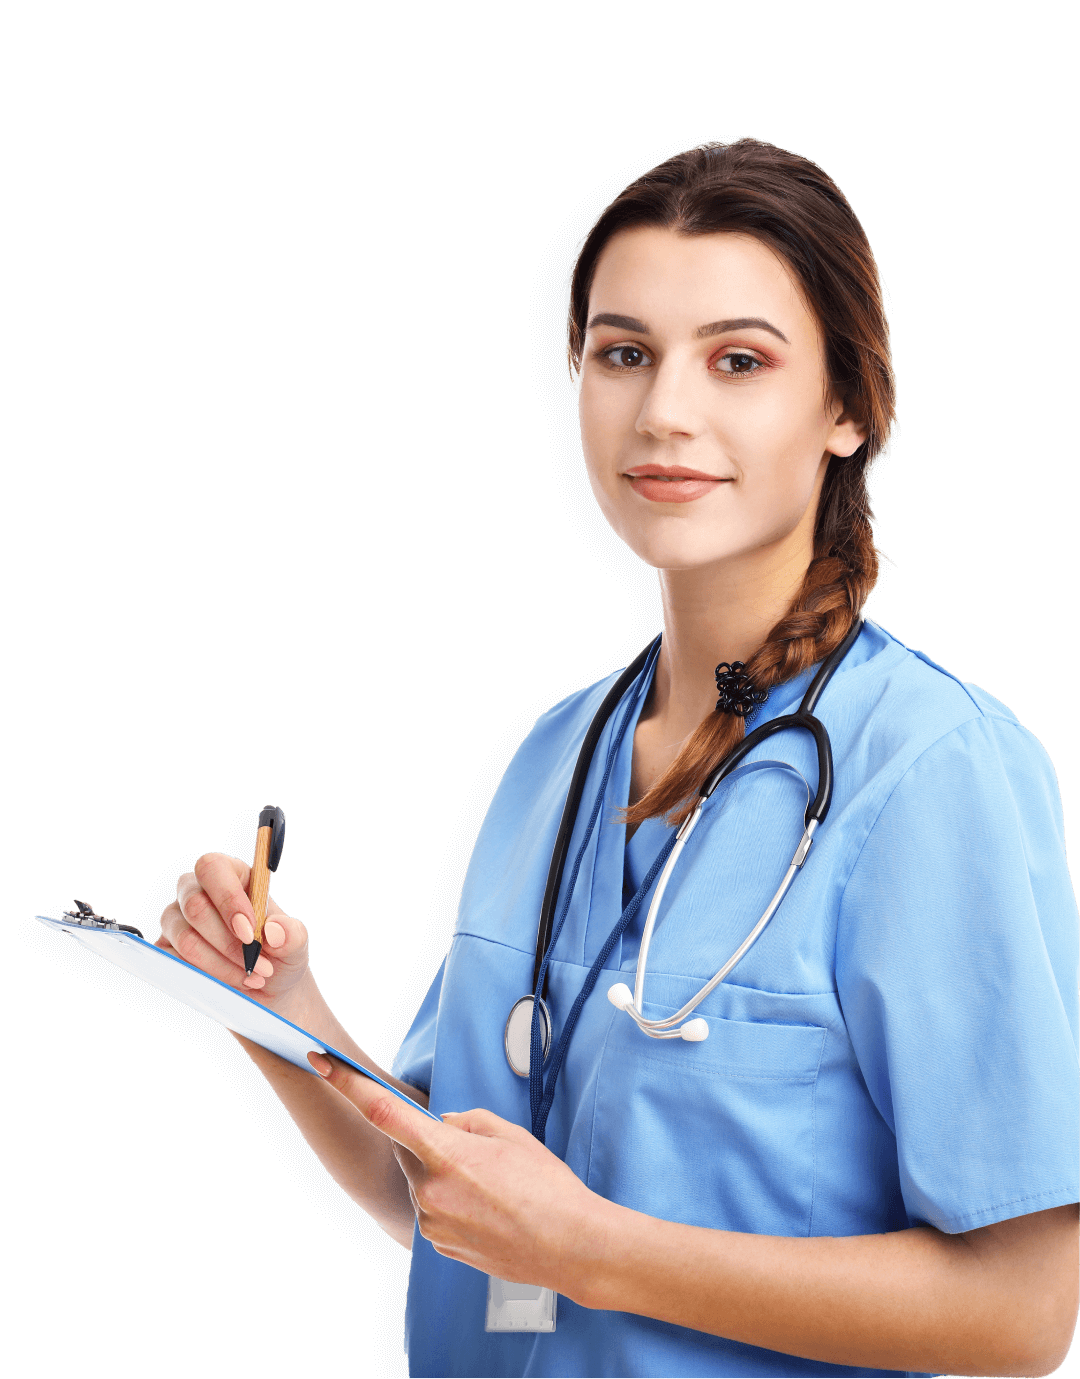 Nurse-Ambulatory Care professional